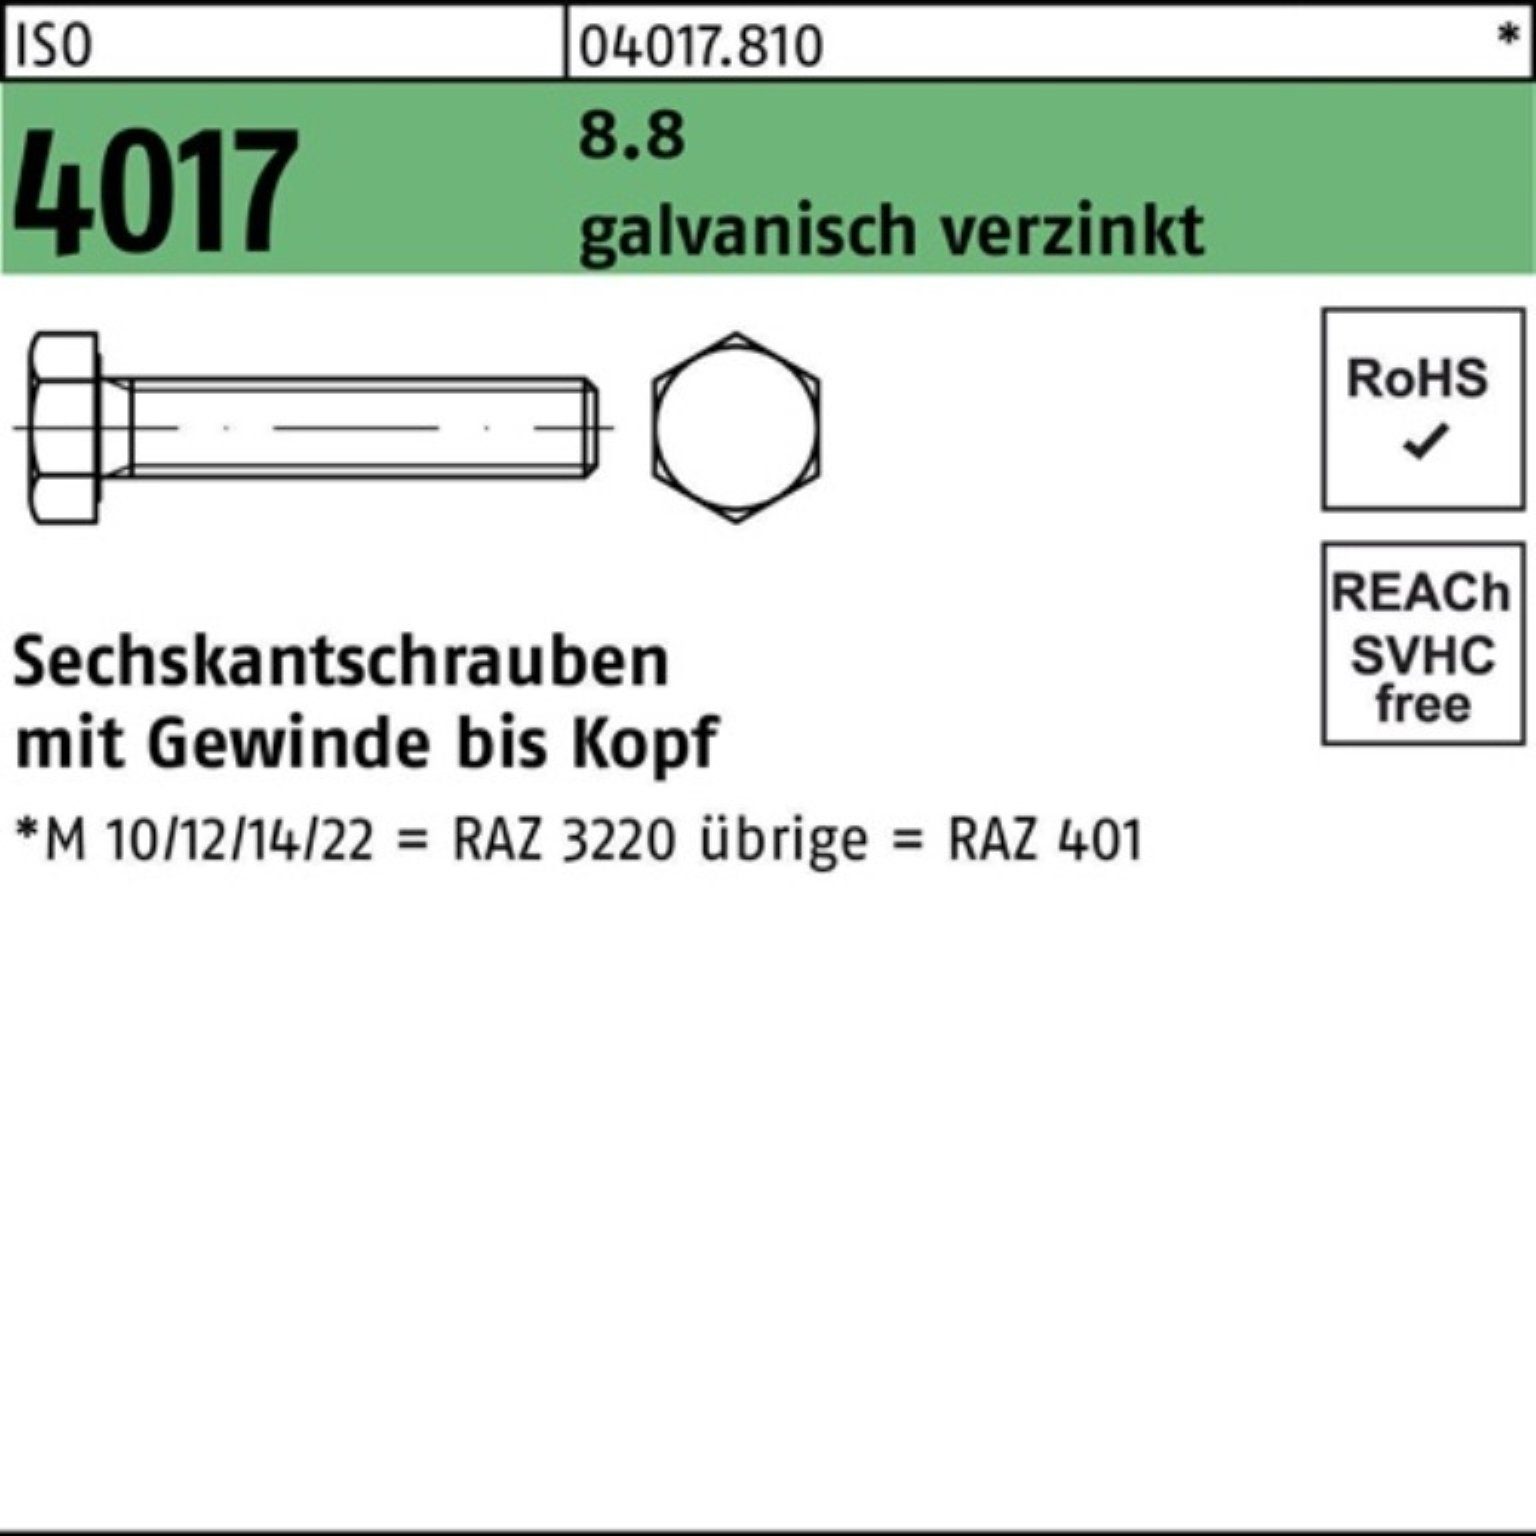 Bufab Sechskantschraube 100er 20 M12x St 4017 Pack galv.verz. ISO 8.8 Sechskantschraube 100 VG